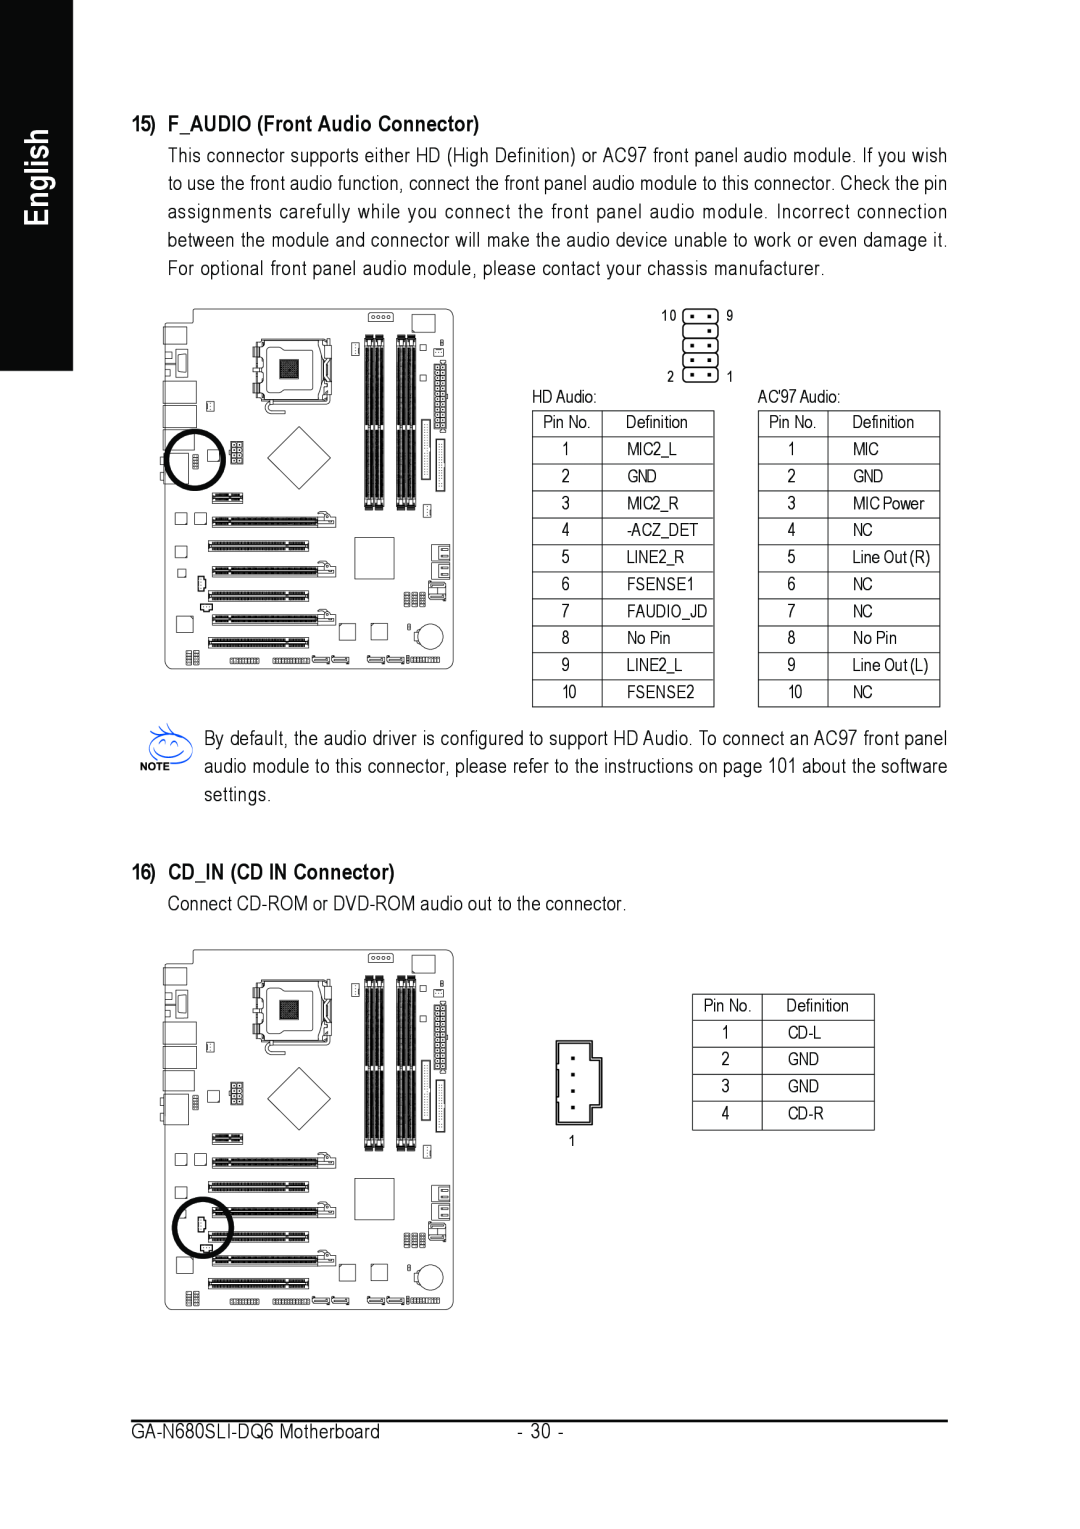 Intel GA-N680SLI-DQ6 user manual FAUDIO Front Audio Connector, CDIN CD IN Connector, English 